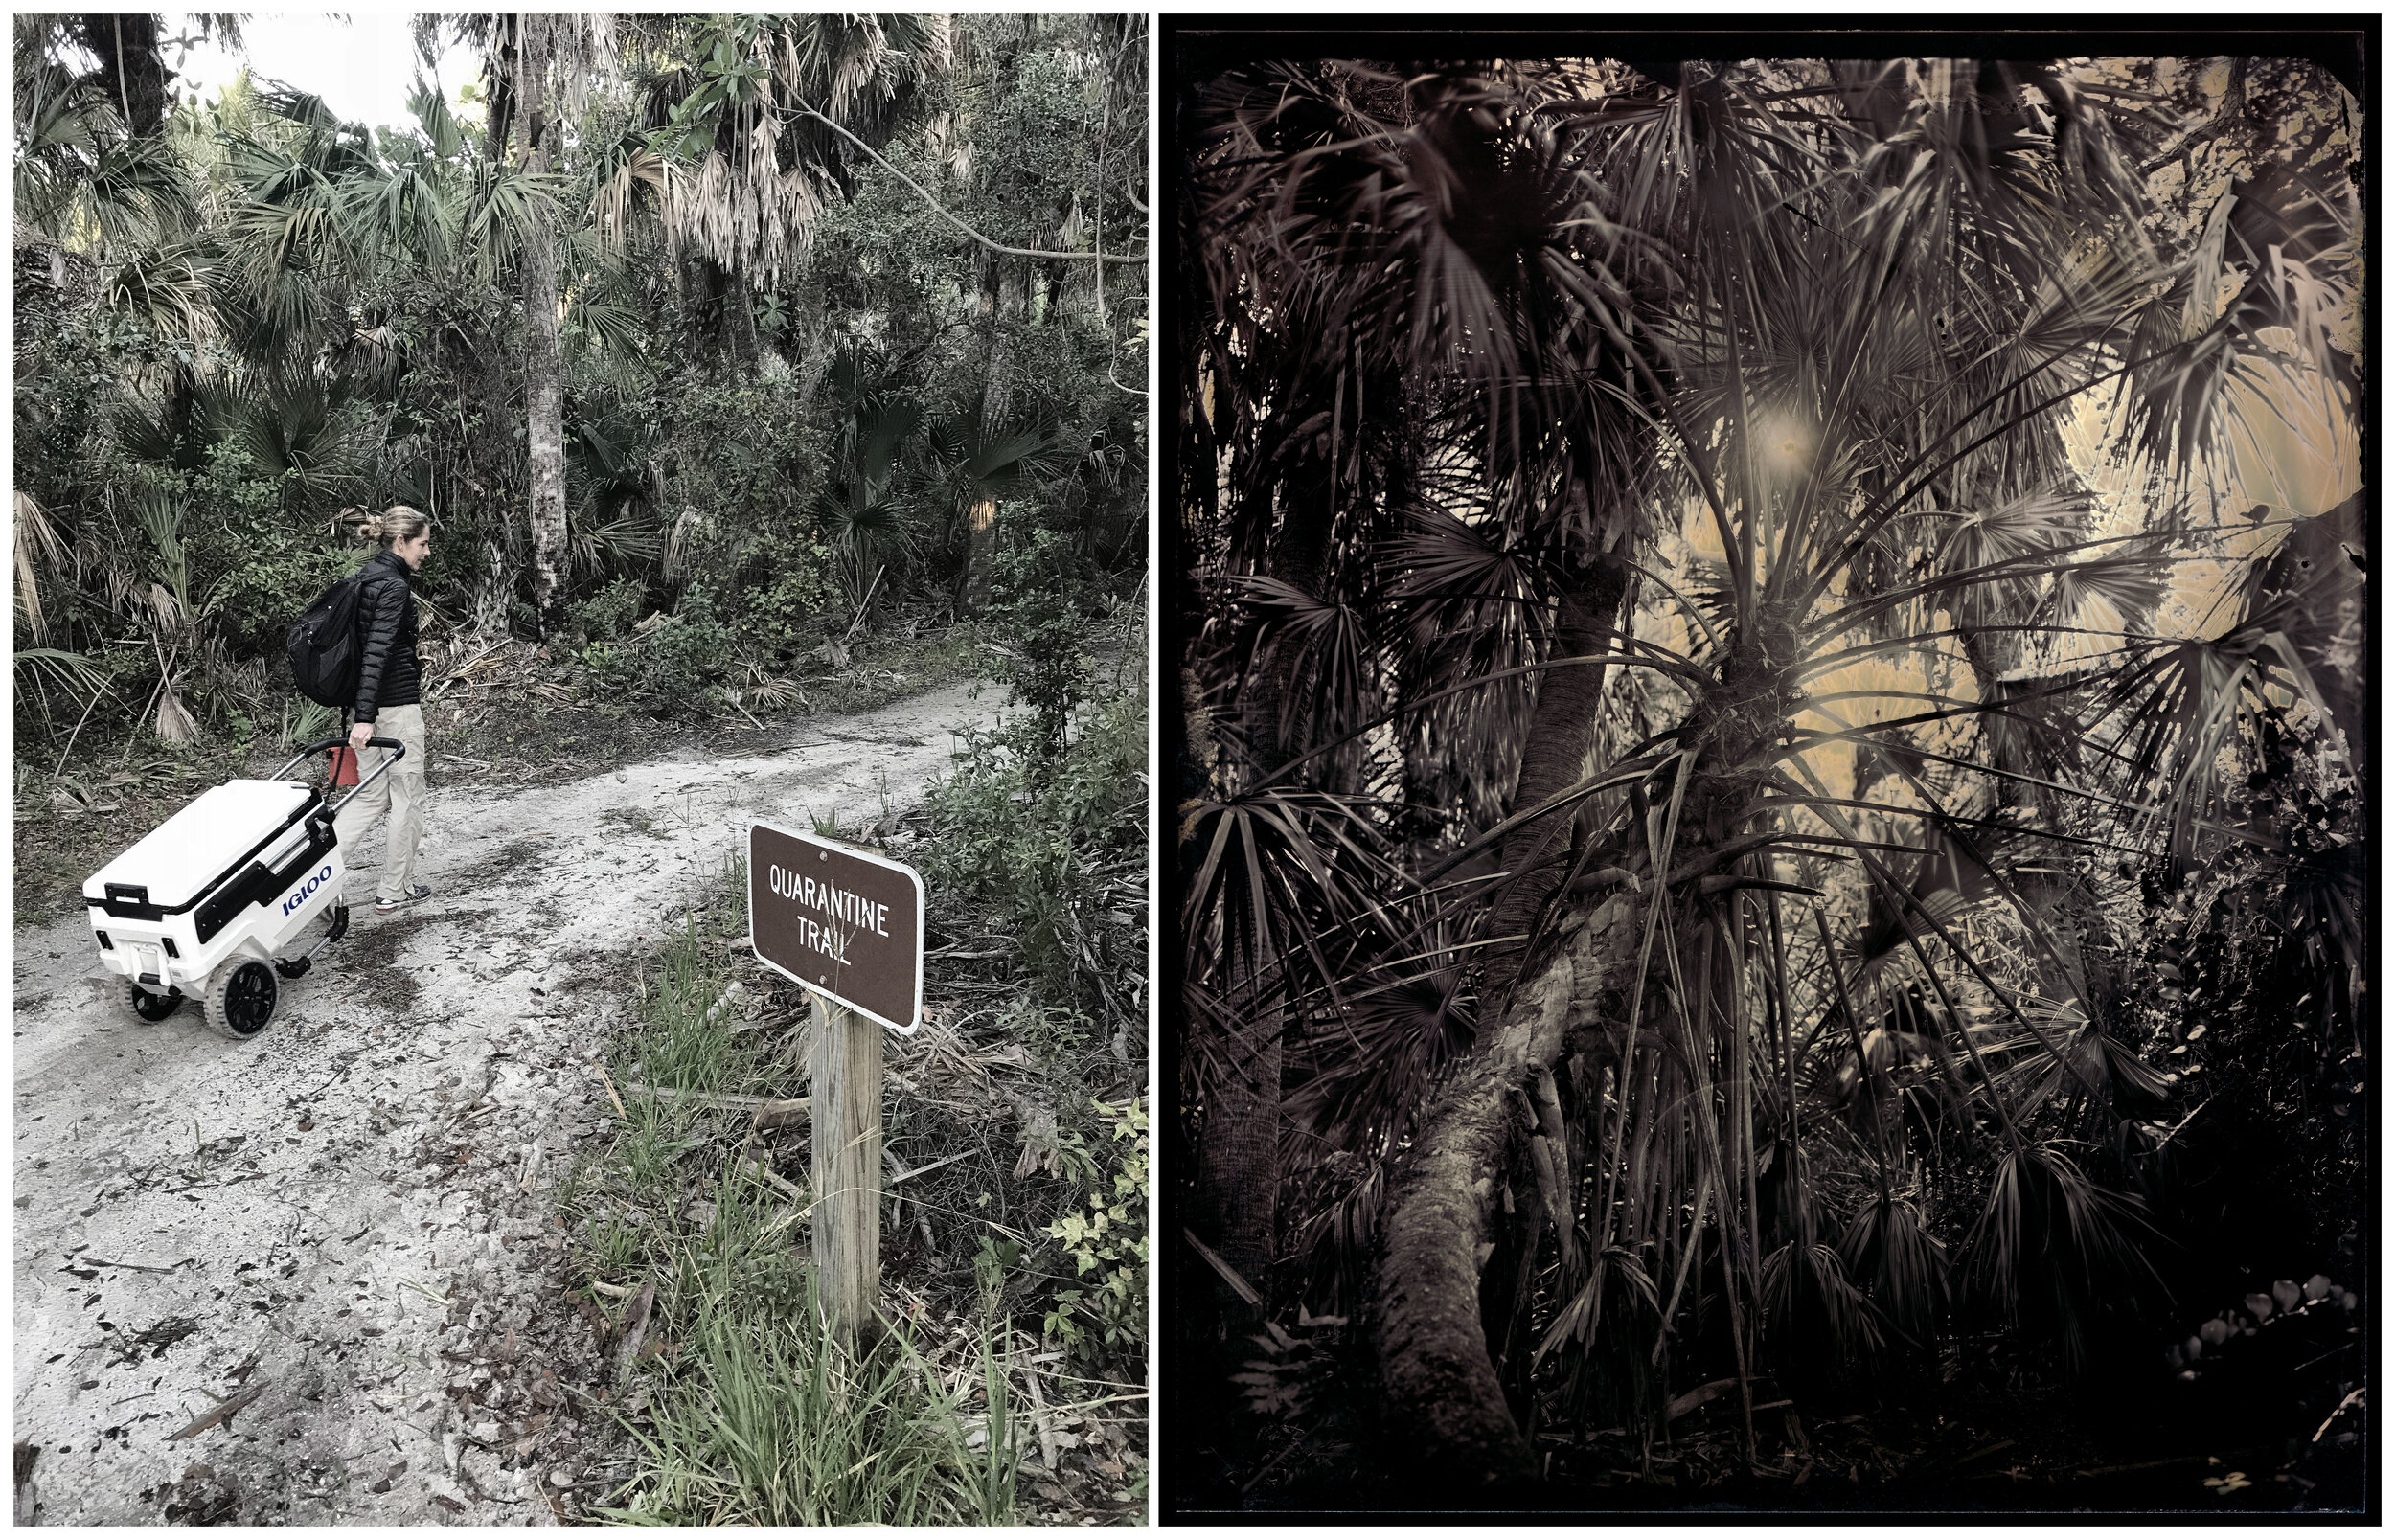  Quarantine Trail,  Cayo Costa, Florida, 2017 